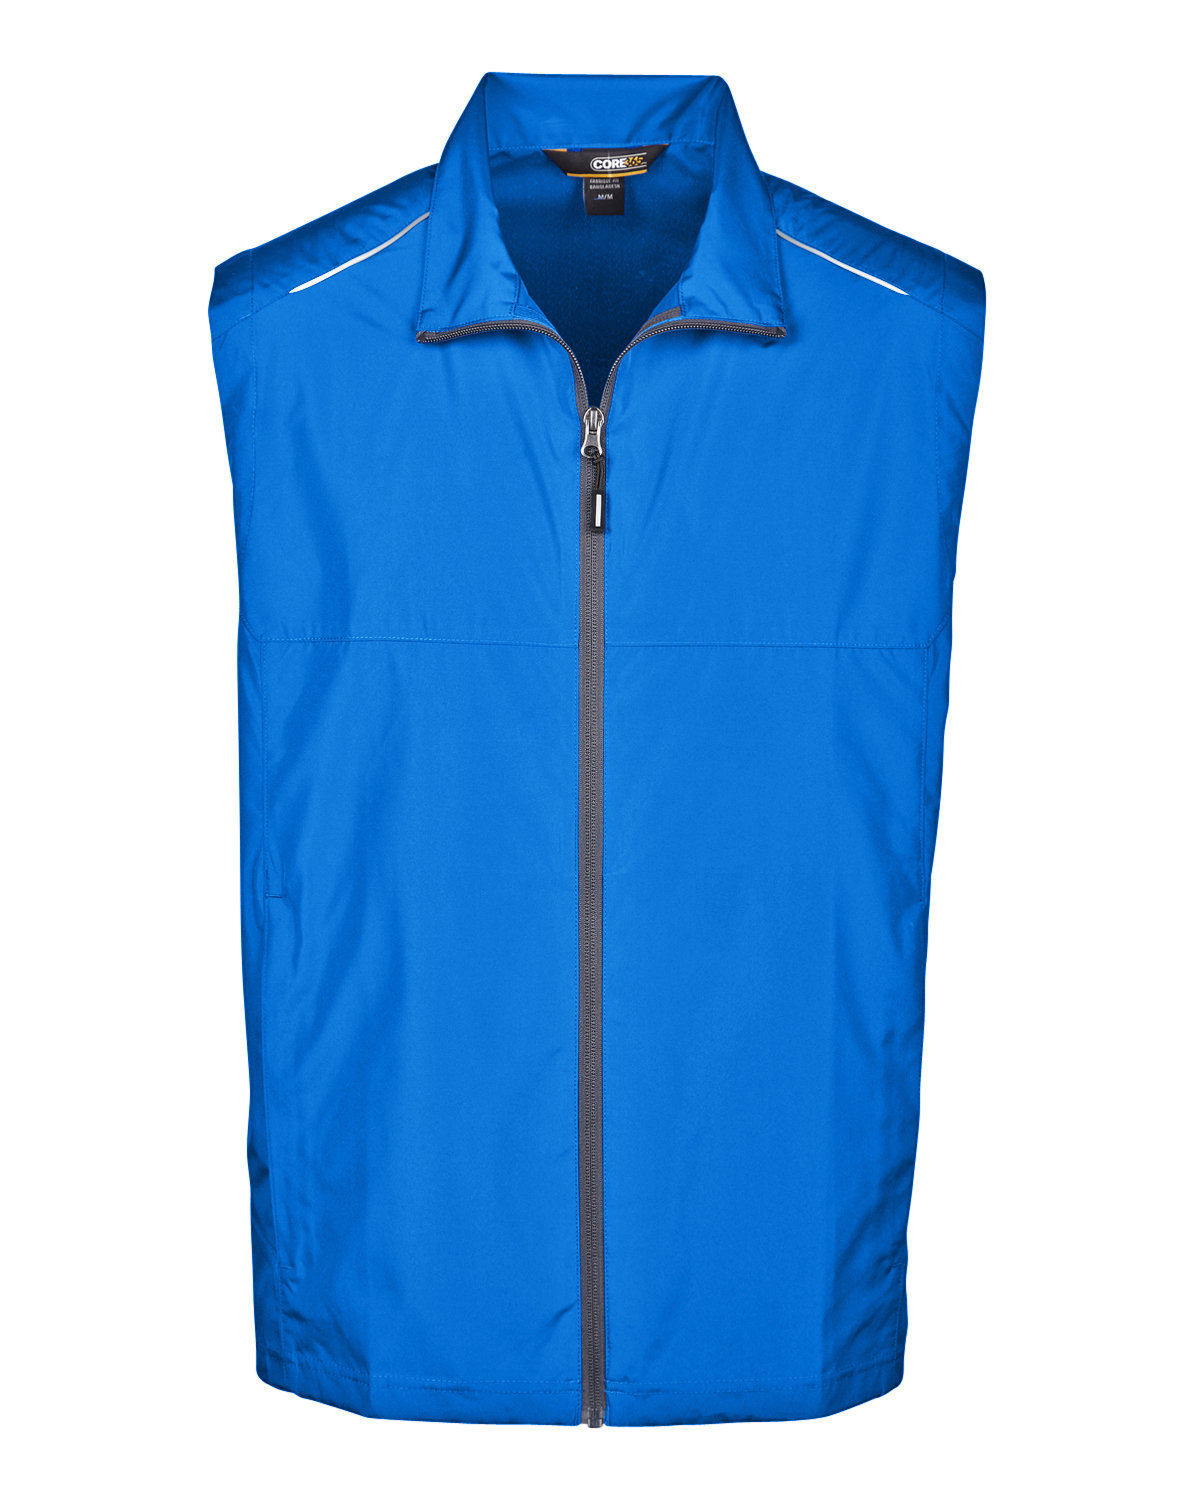 Picture of Core365 Men's Techno Lite Unlined Vest 